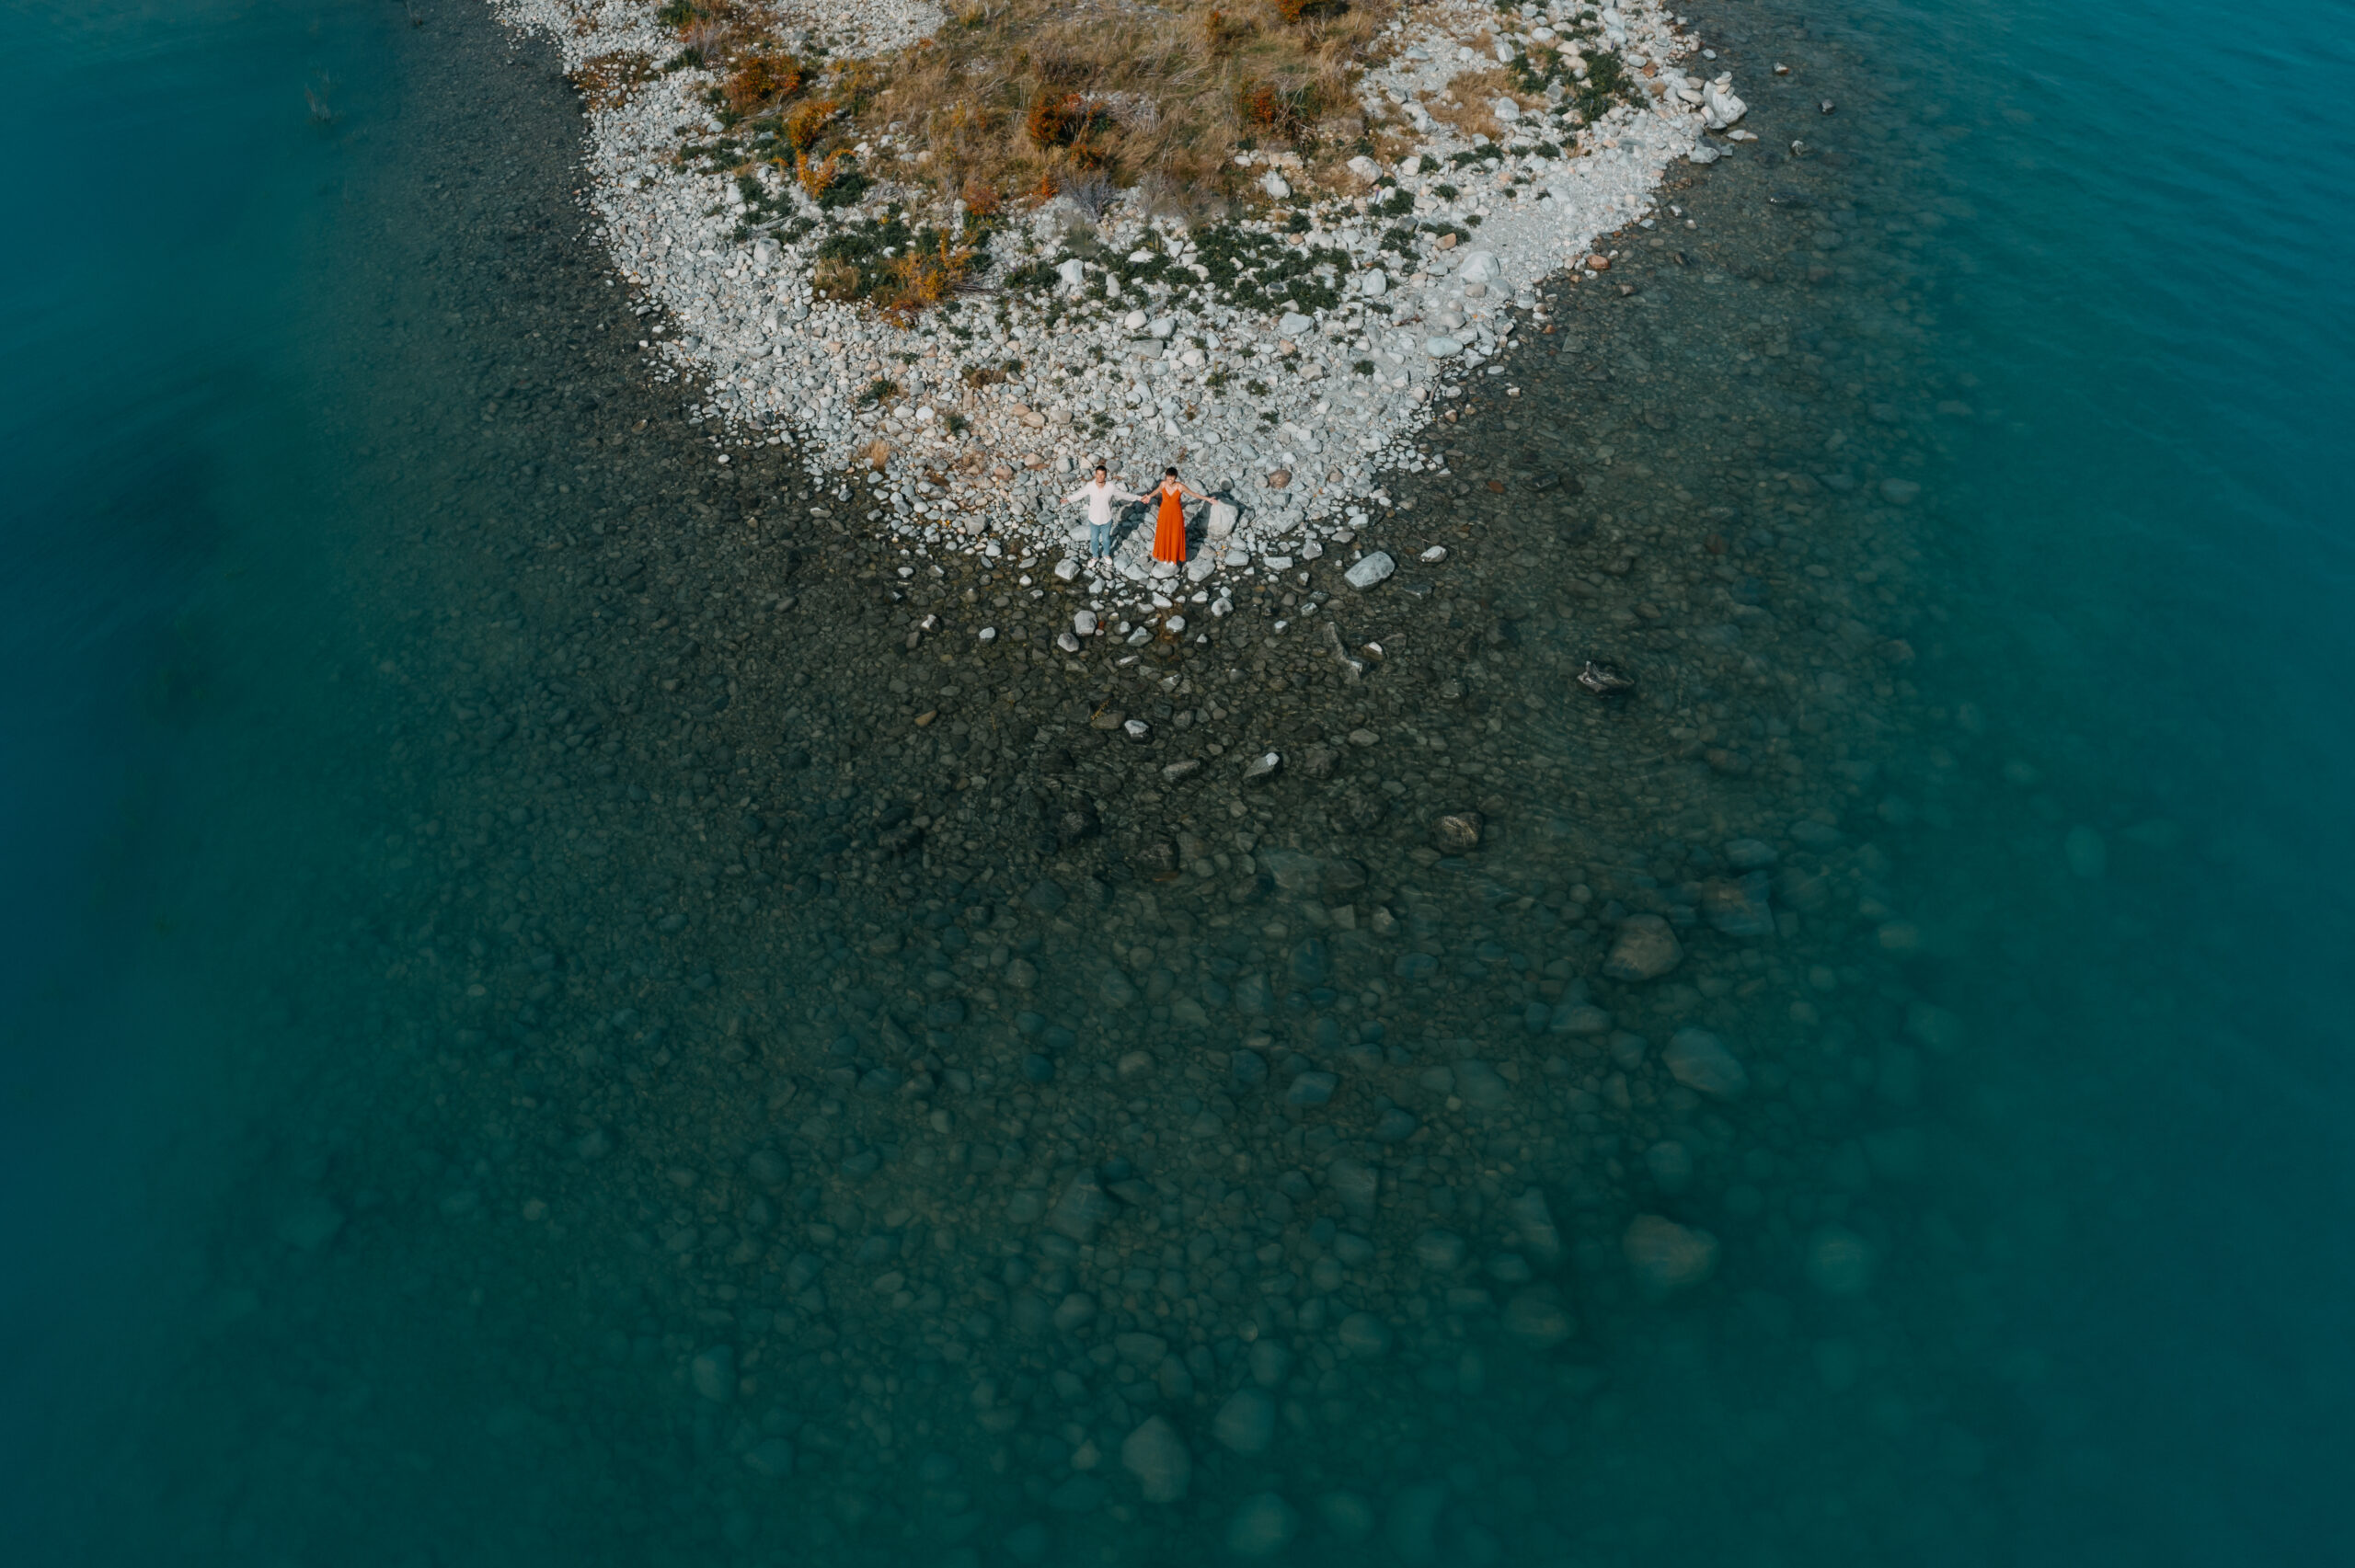 Photoshoot Adventure in Tekapo Drone Photo